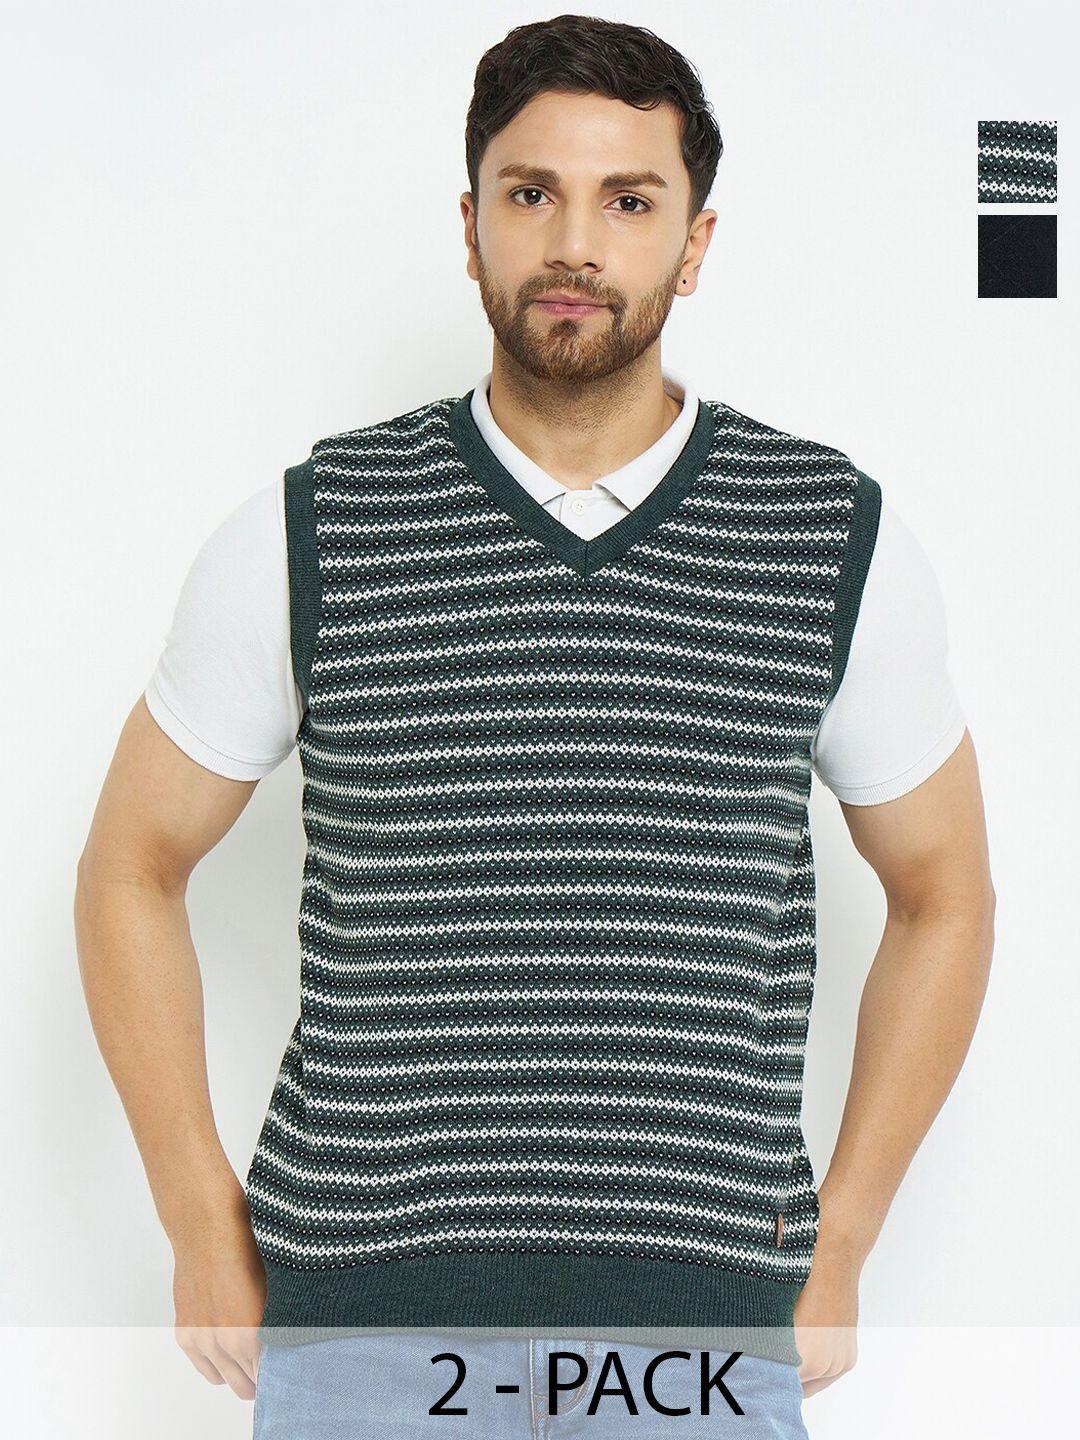 duke-pack-of-2-striped-sleeveless-acrylic-sweater-vest